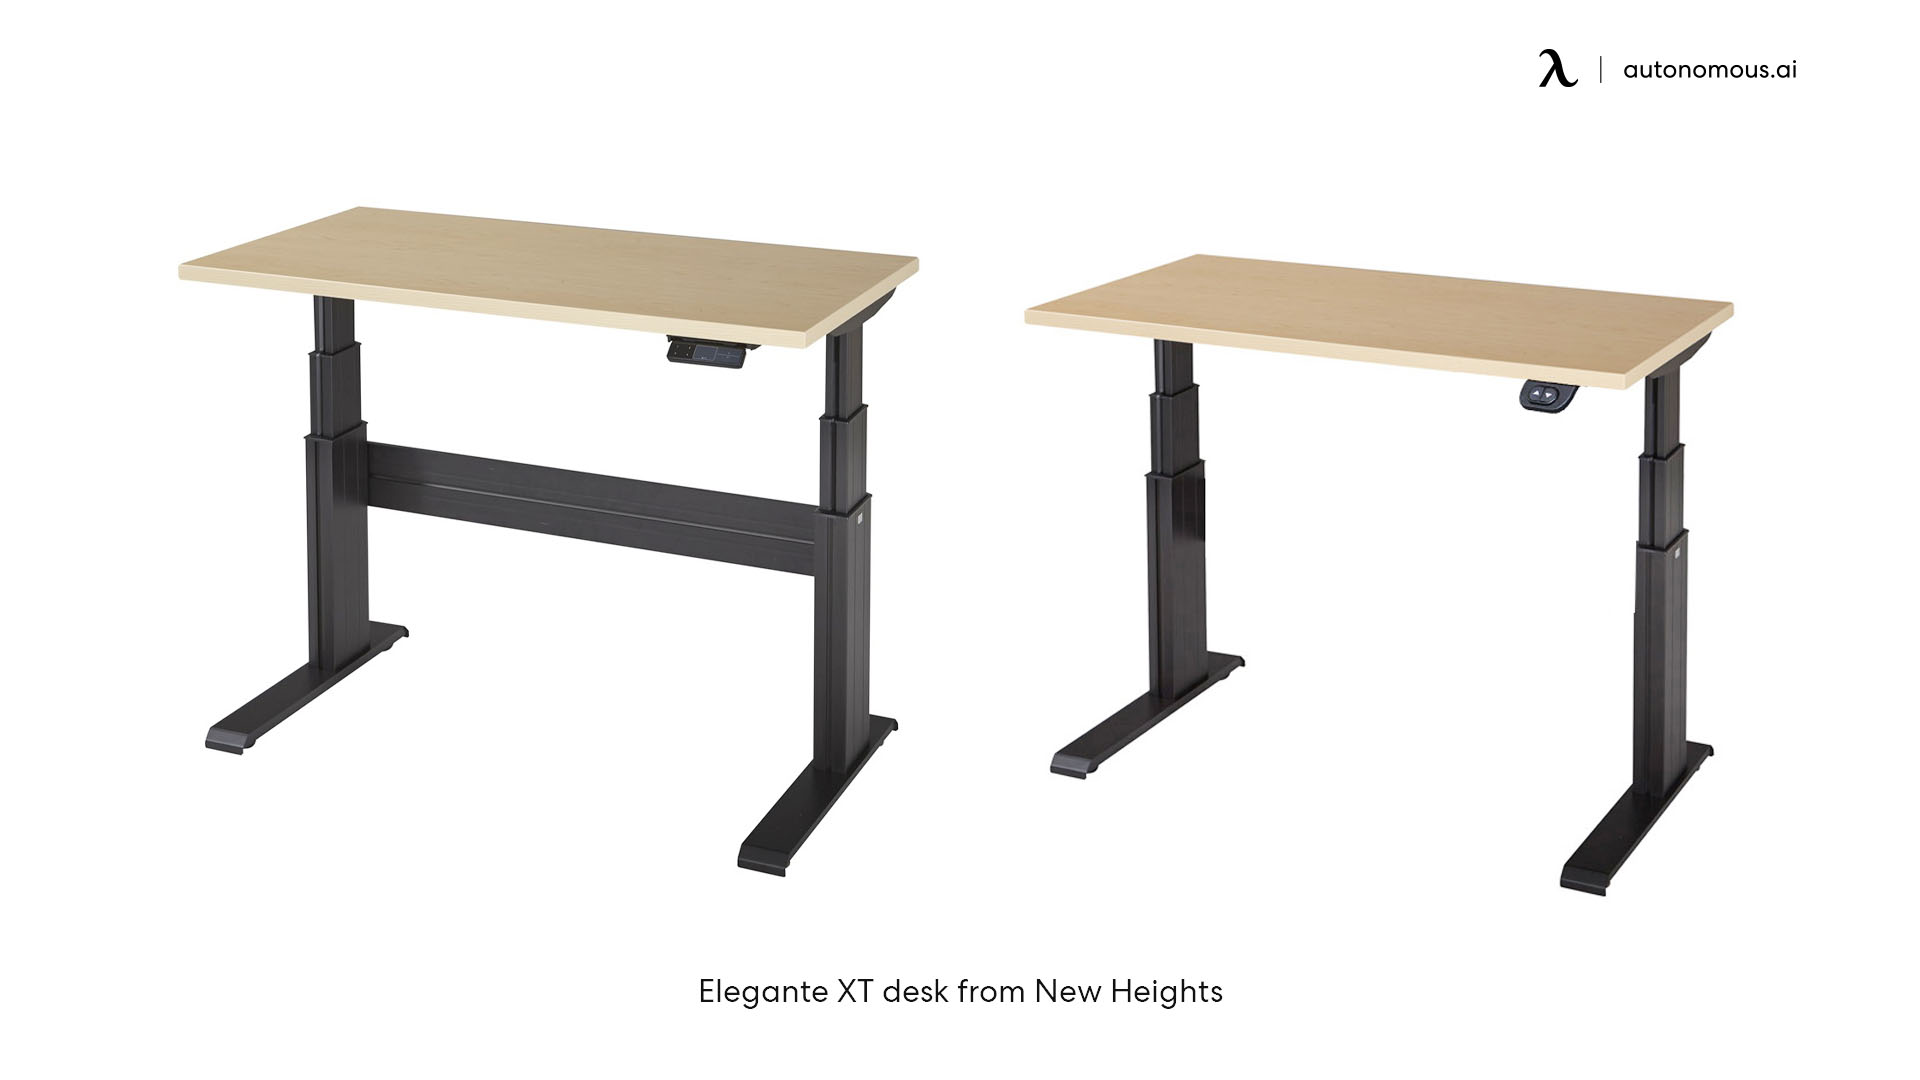 Elegante XT desk from New Heights